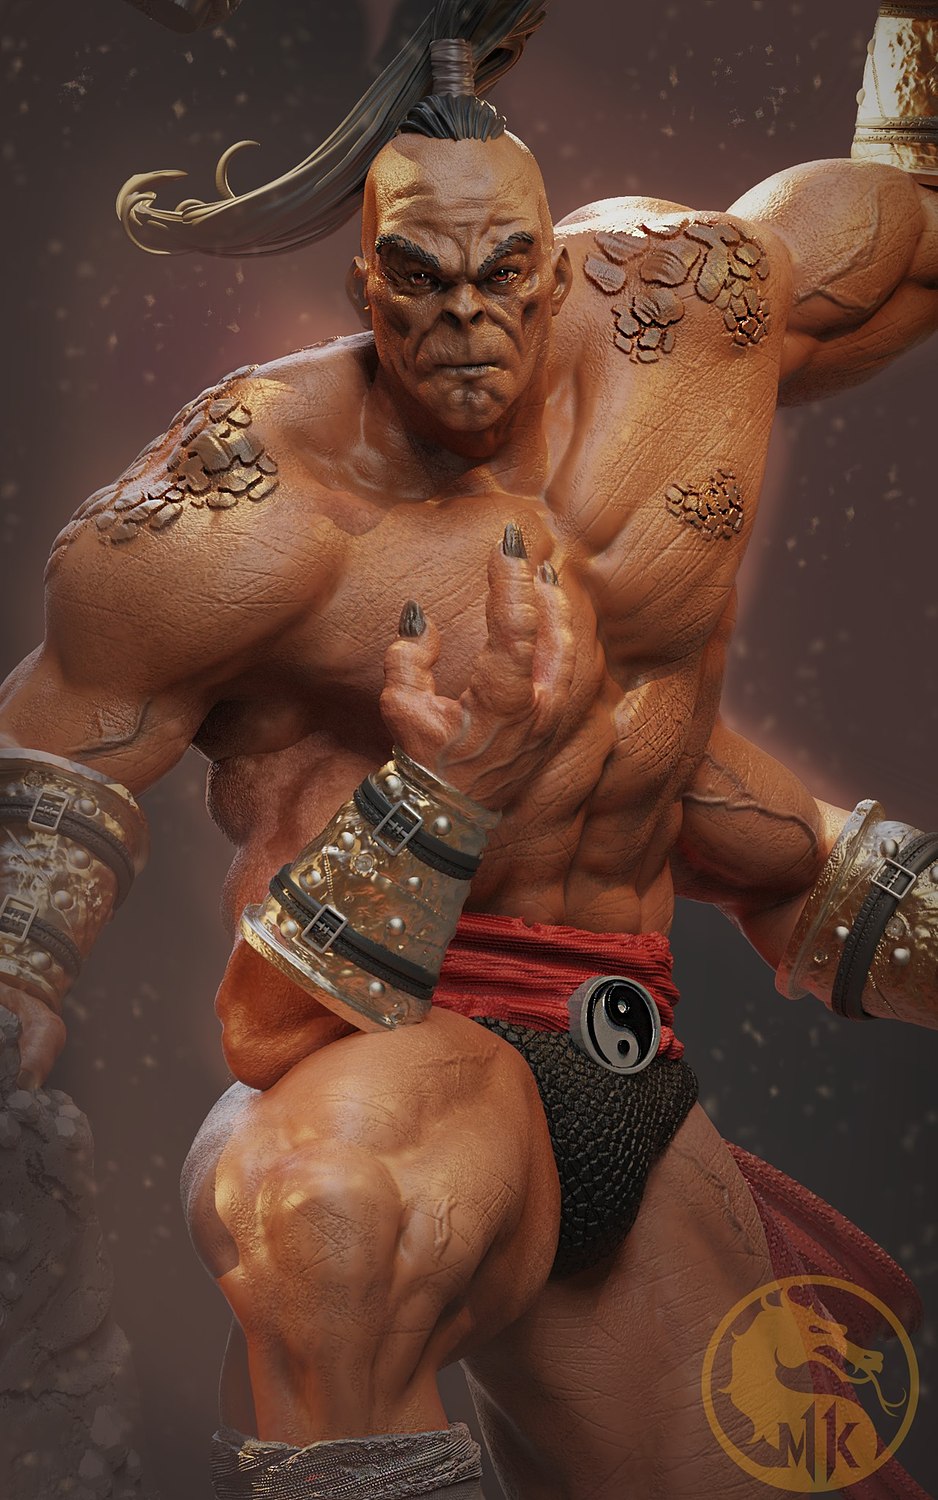 Goro from Mortal Kombat